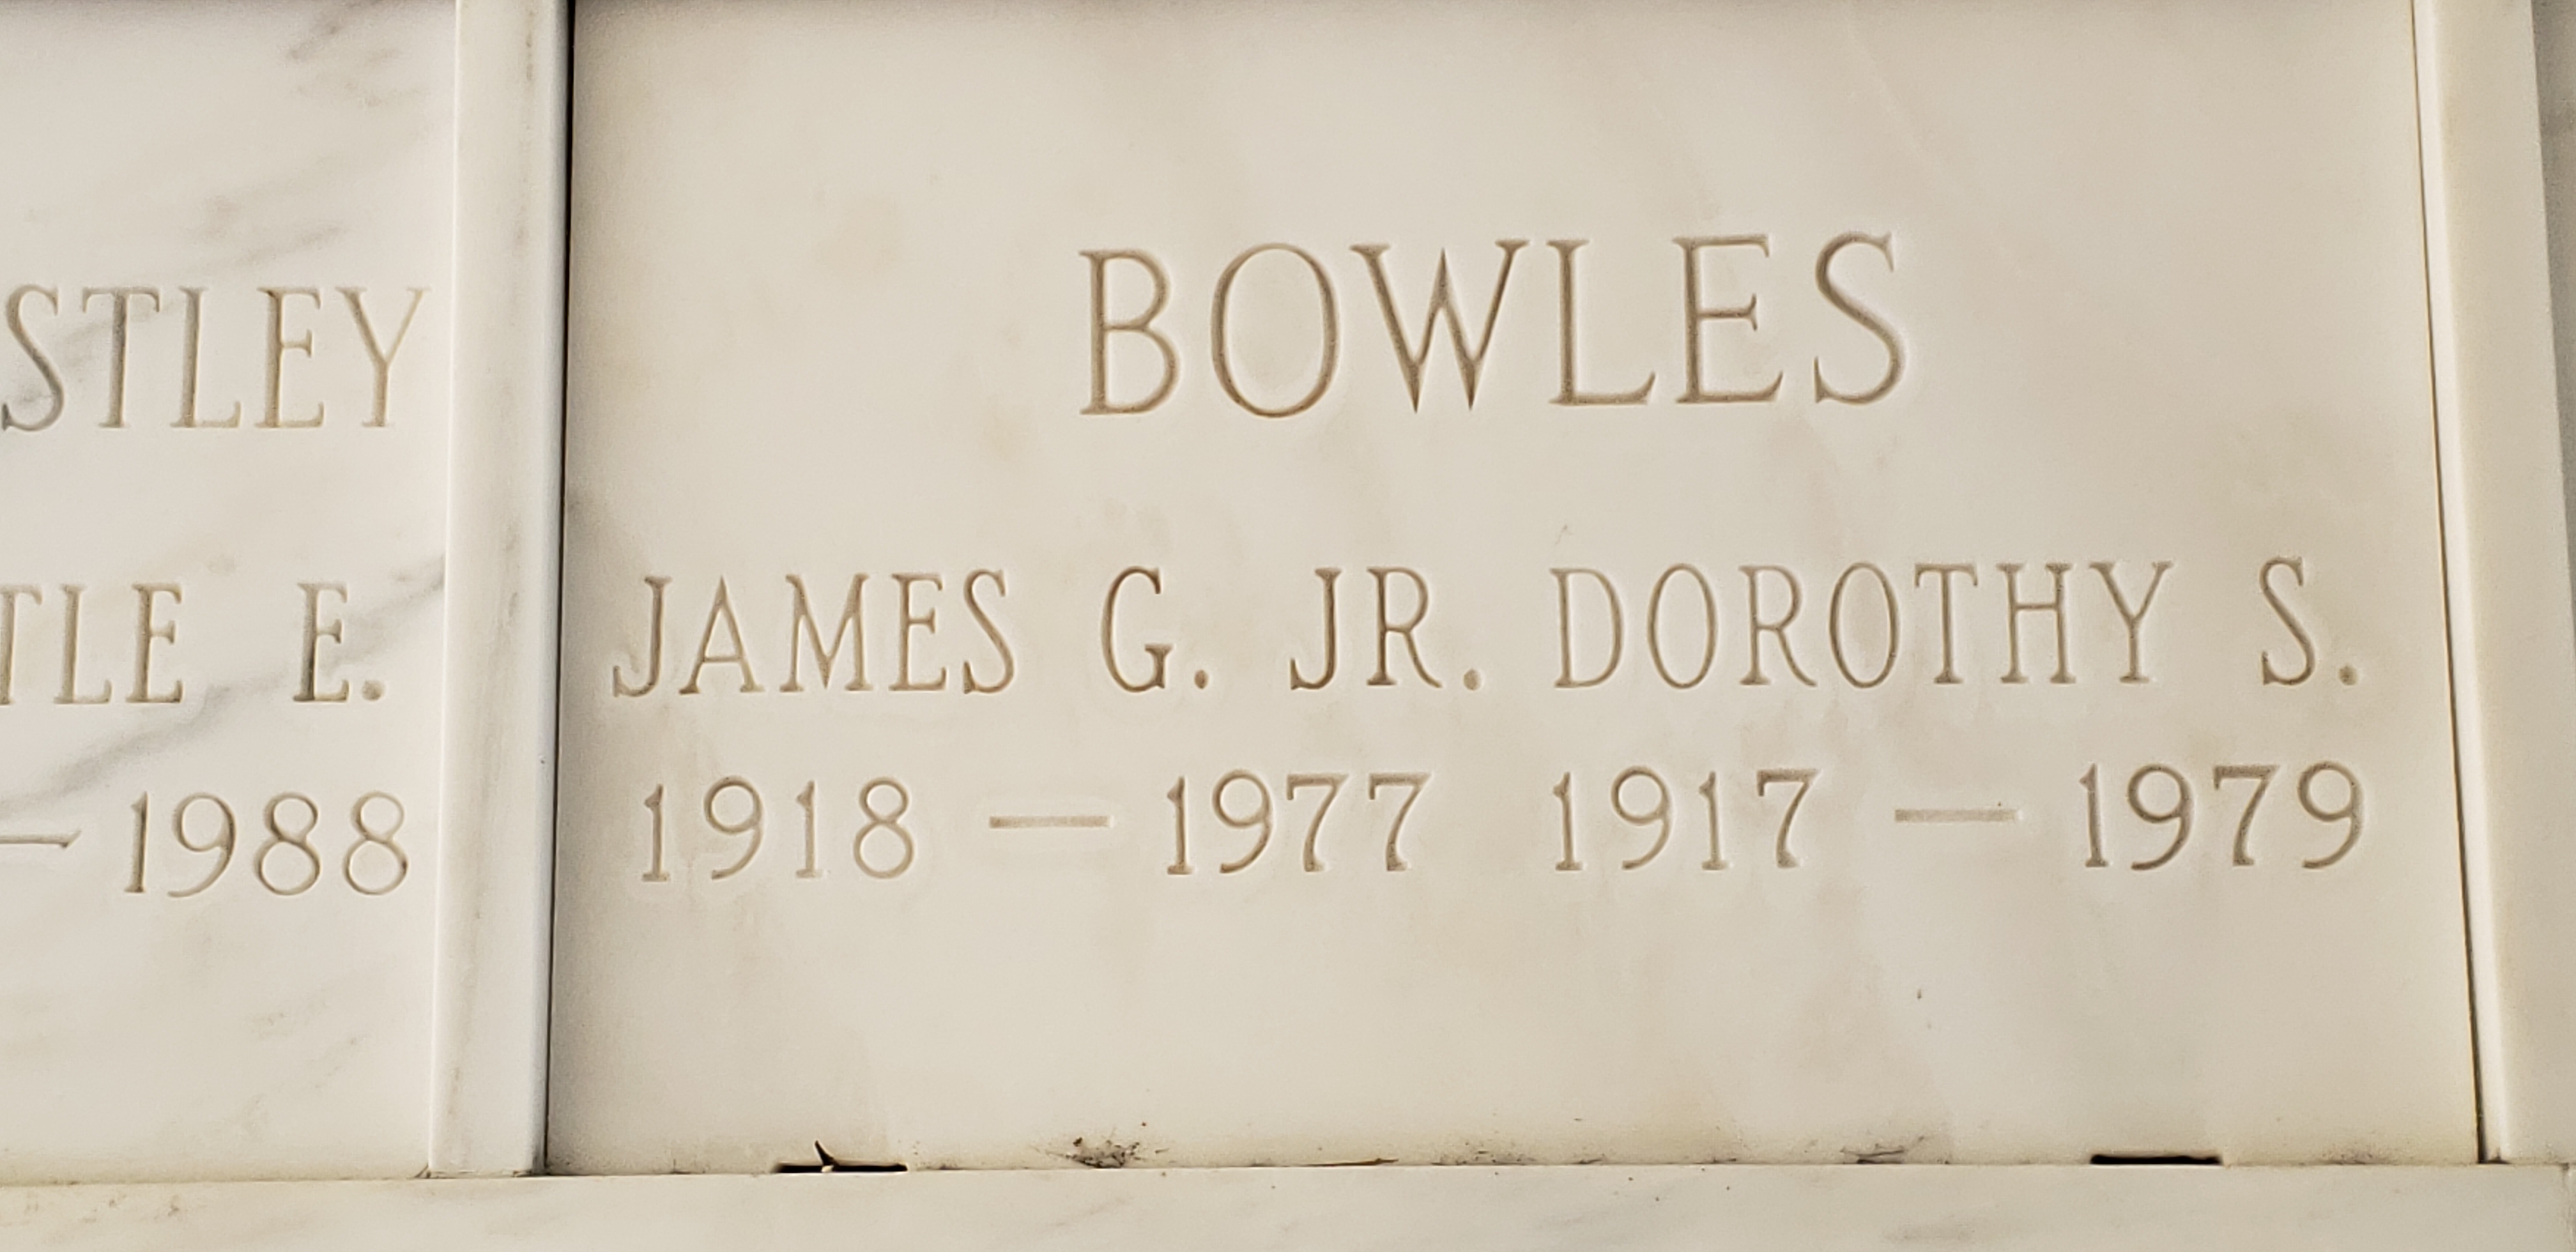 James G Bowles, Jr